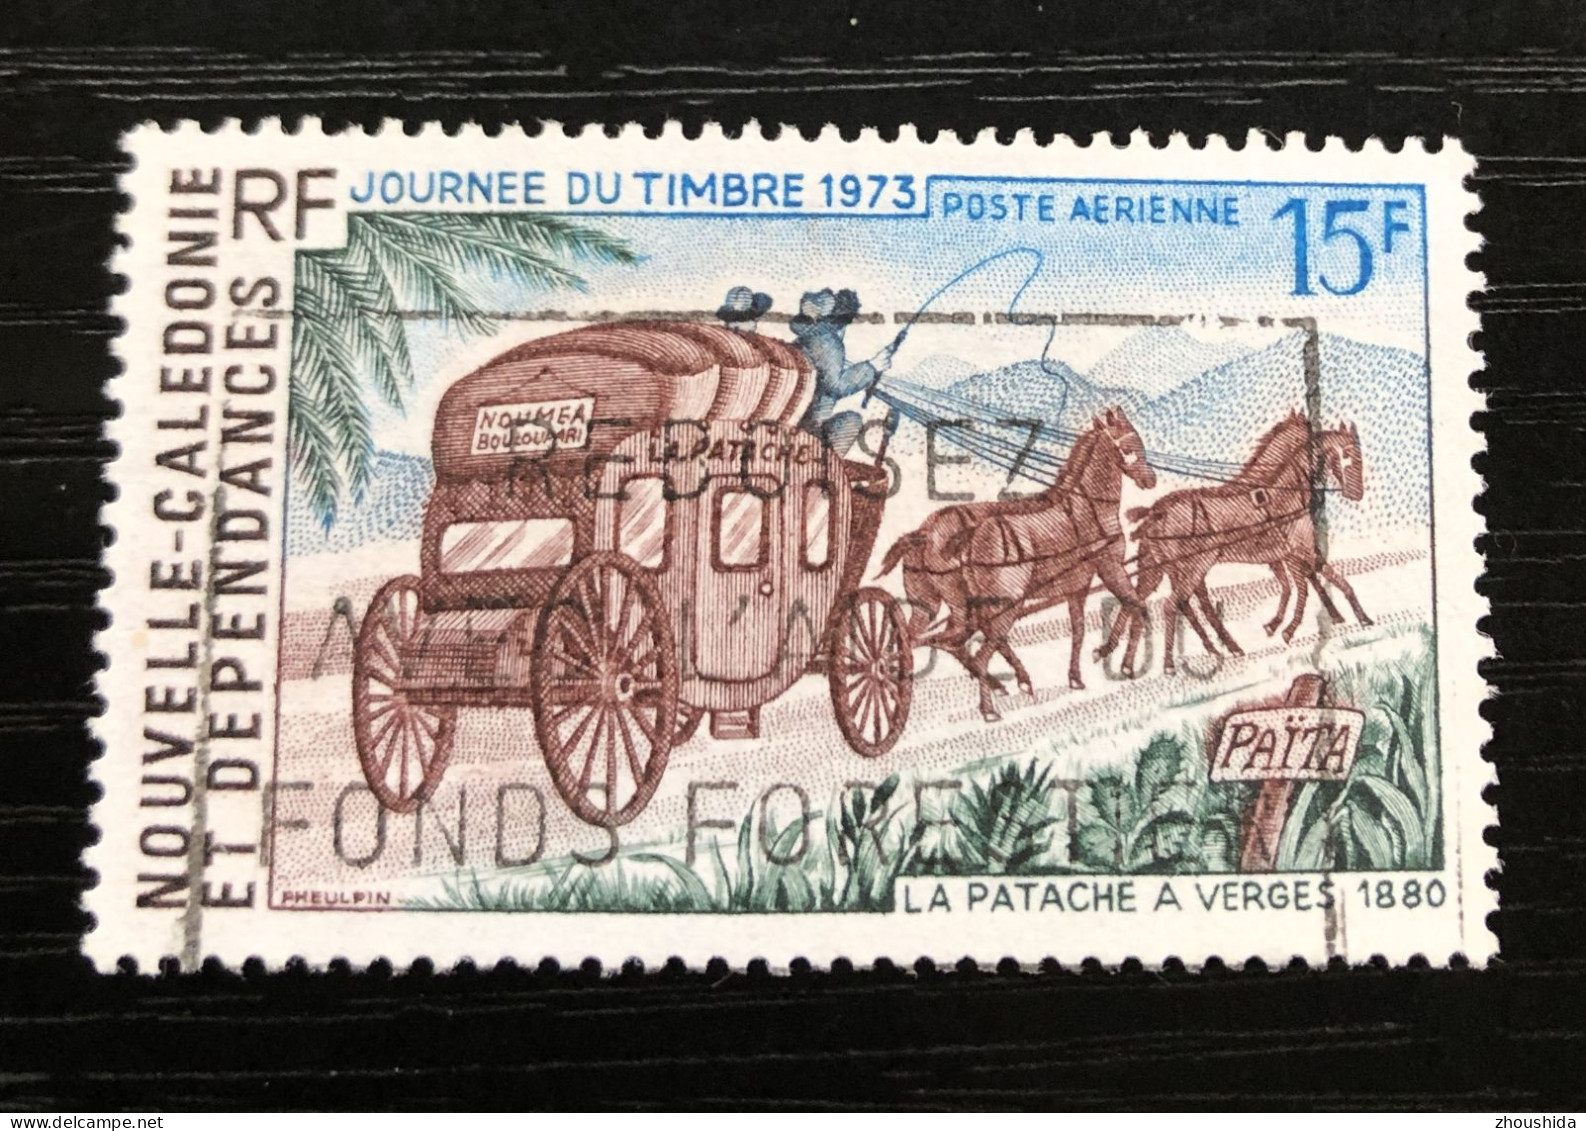 New Caledonia 1973 Postal Day Air Stamp 15F Fine Used - Gebruikt